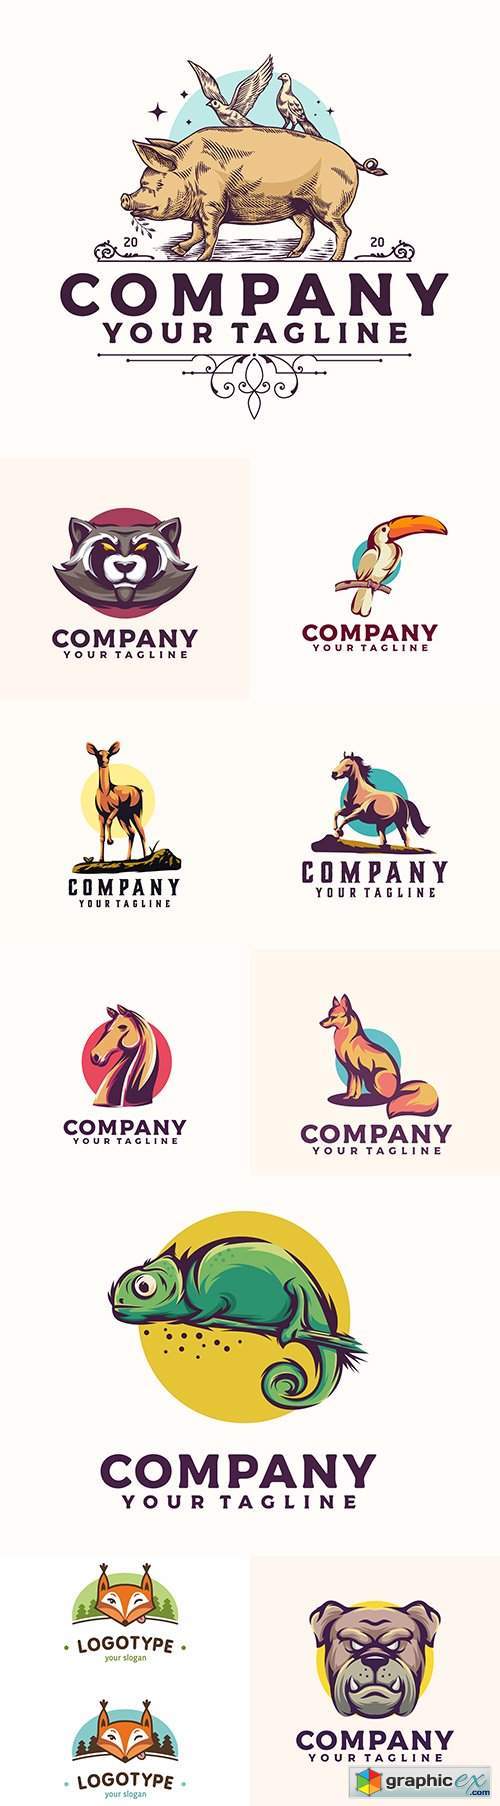 Brand name company logos business corporate design 64